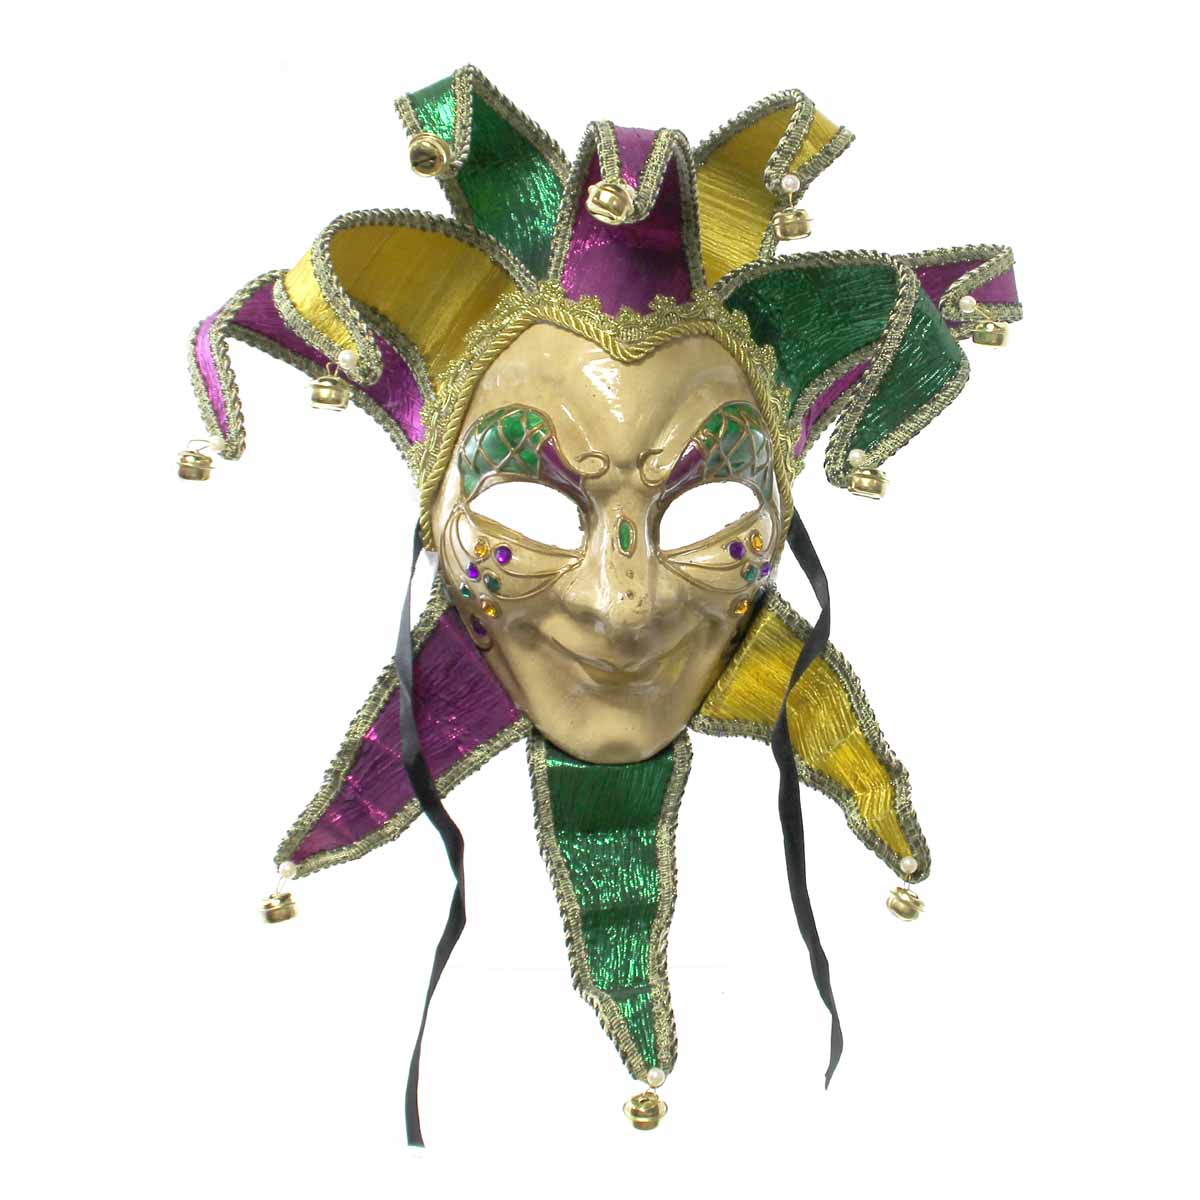 Jester Masks, Mardi gras mask display within a souvenir sho…